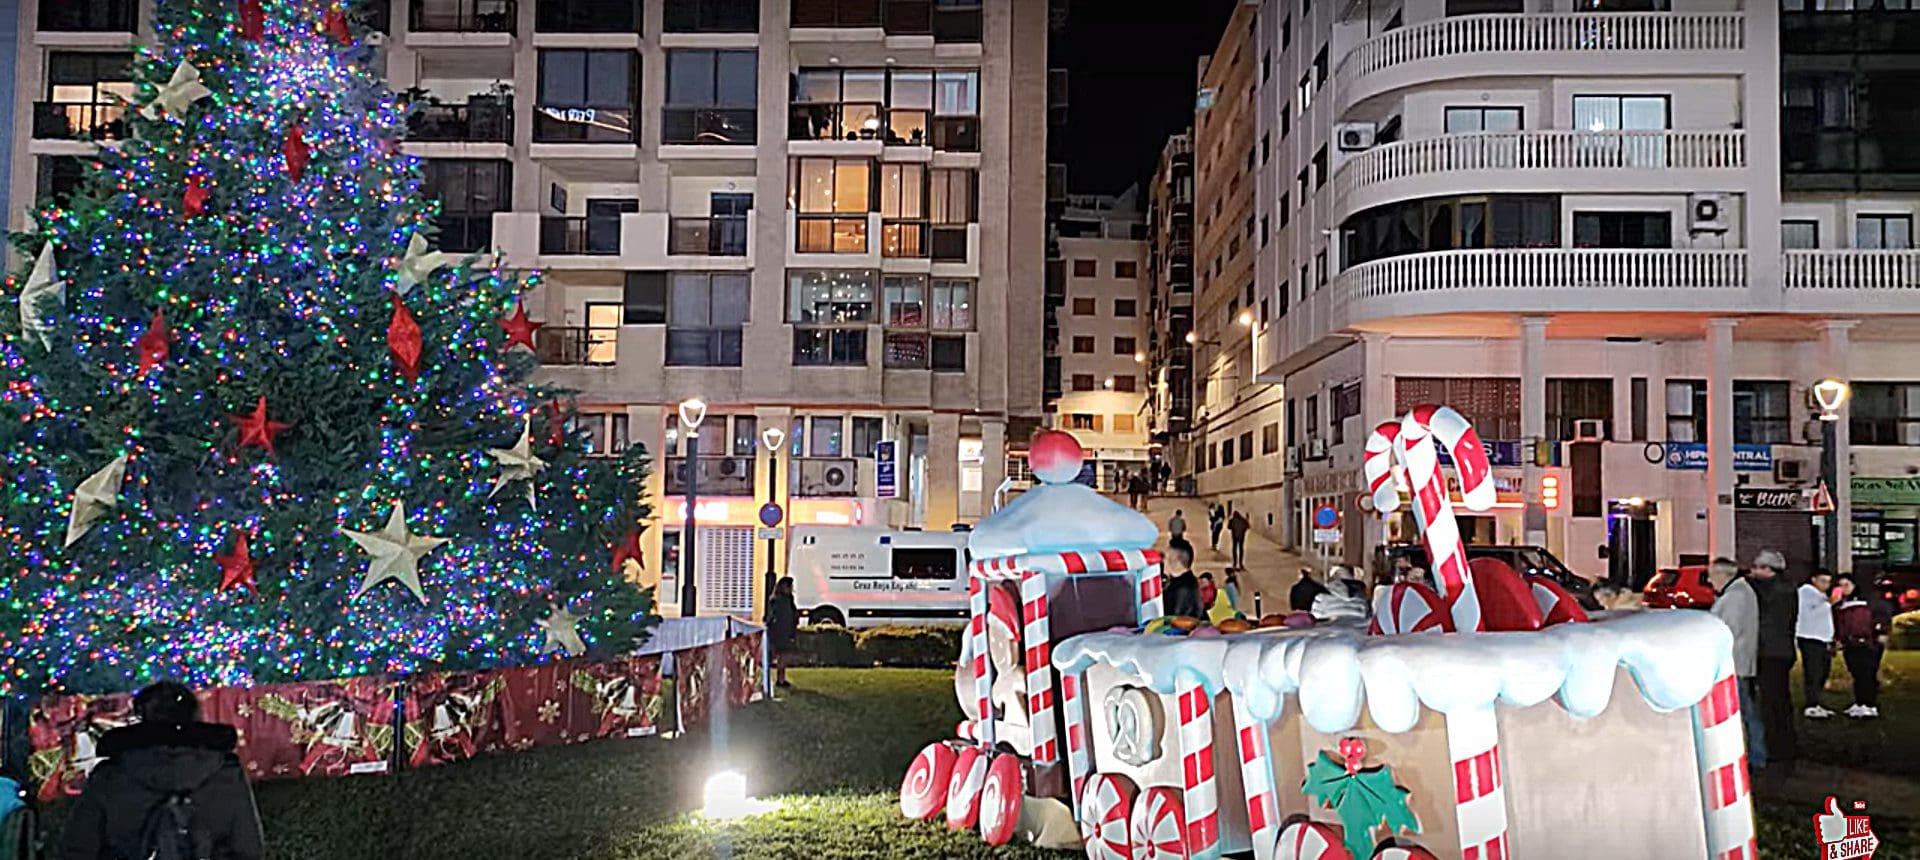 Benidorm transformed into a glittering fairyland for the festive season